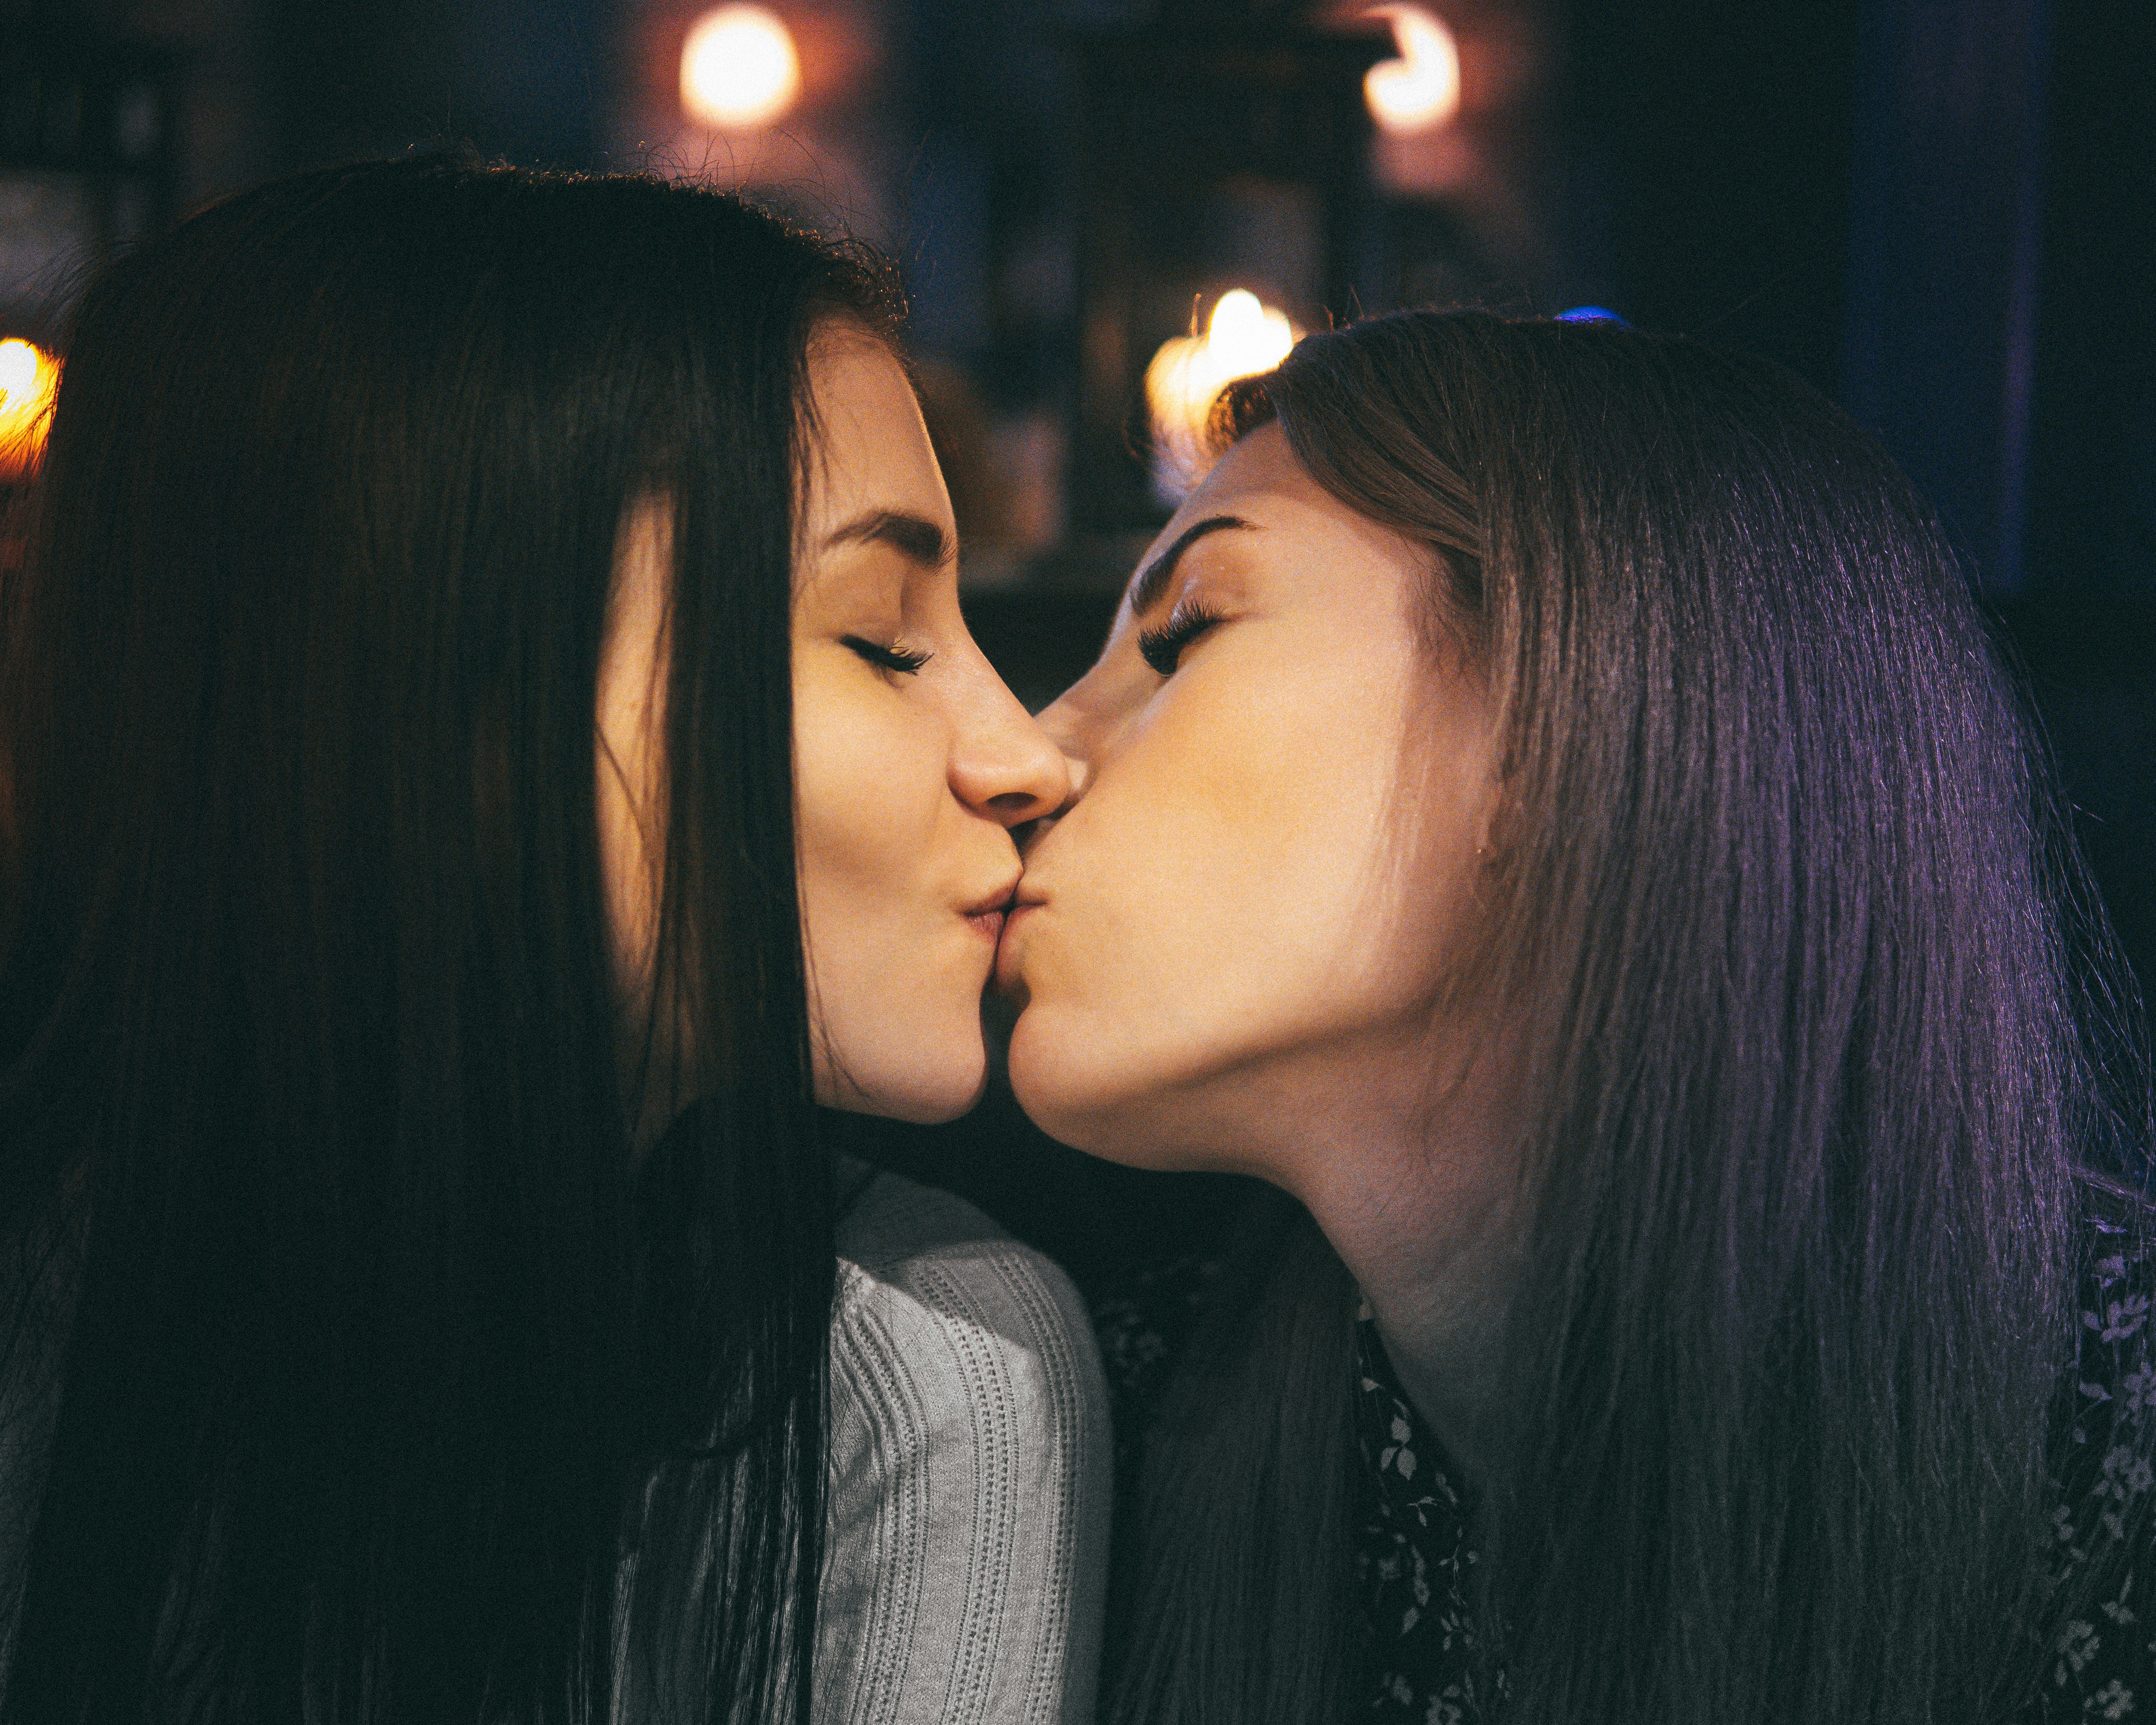 brett hibbs share hot mexican girls kissing photos